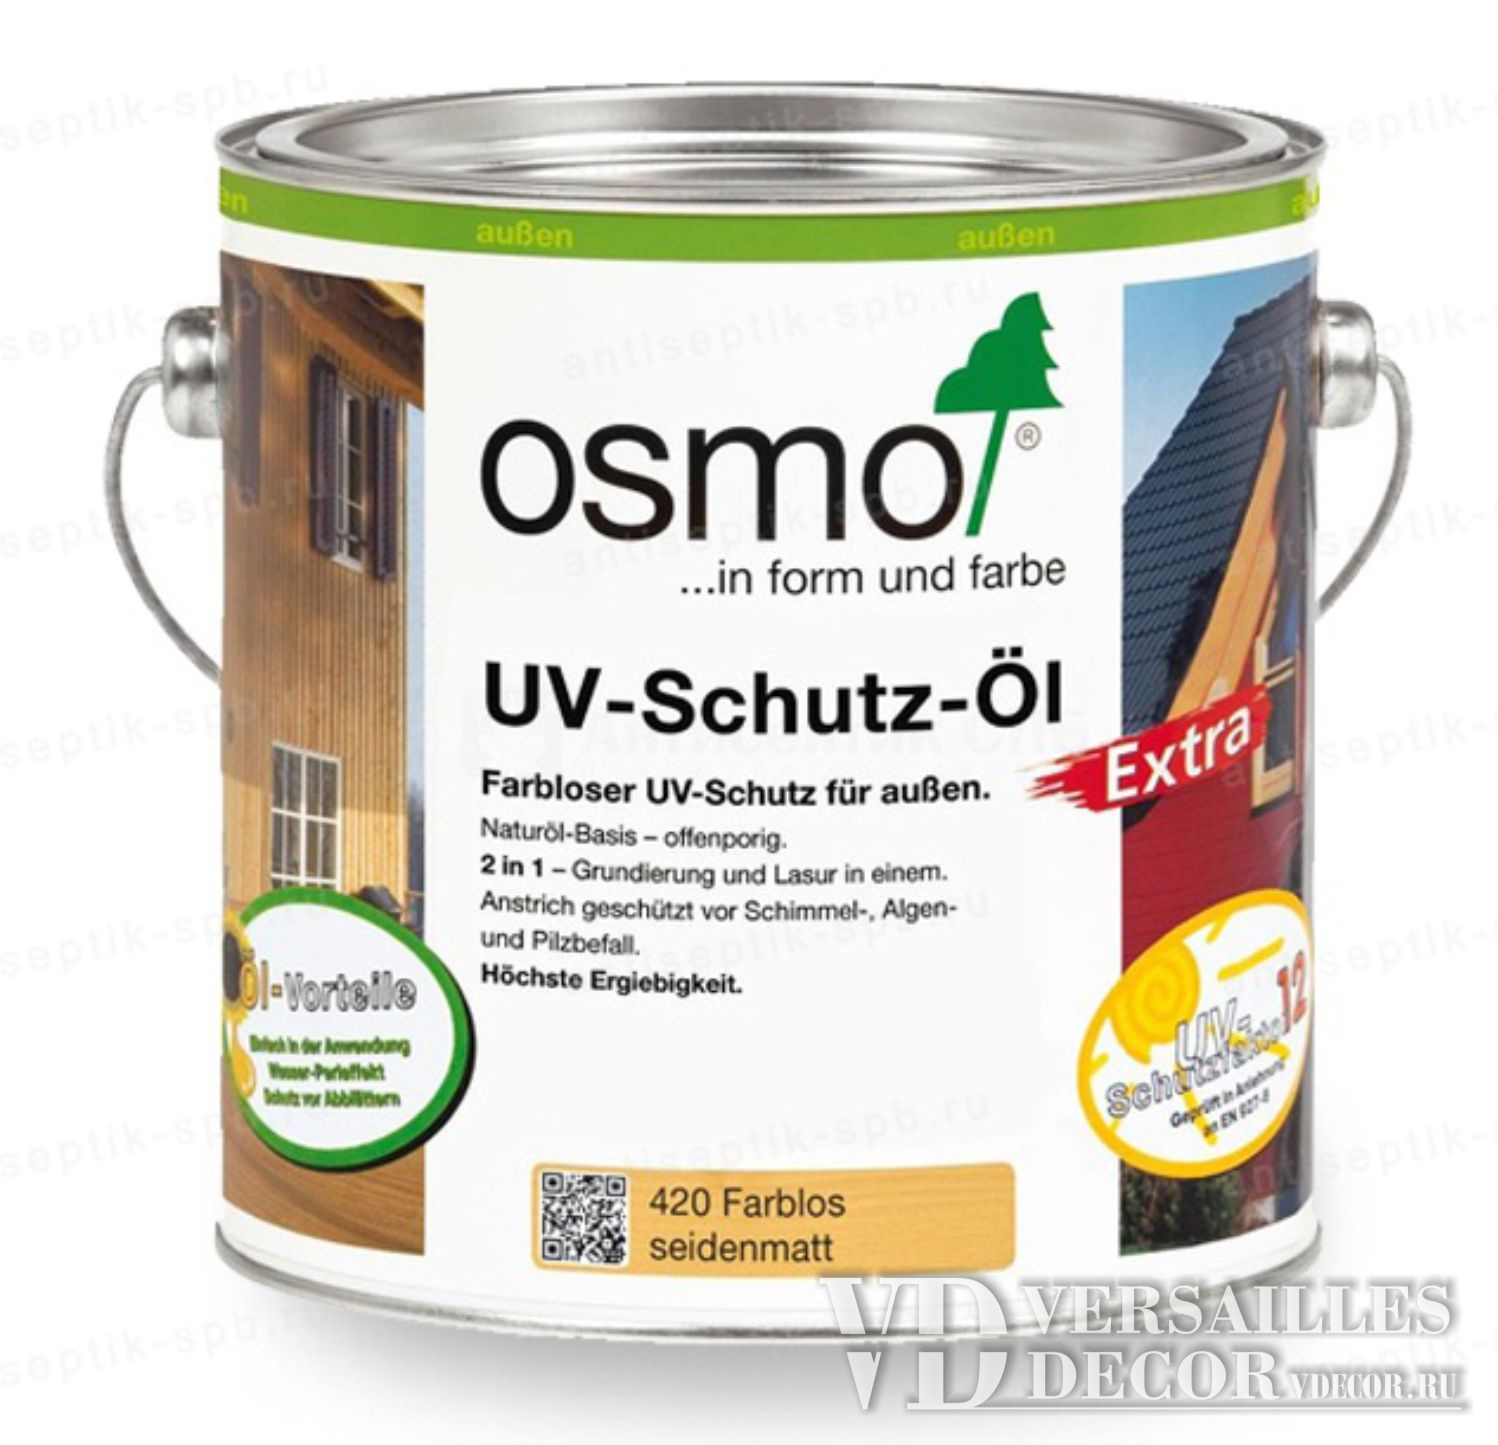 UV-Schutz-Öl